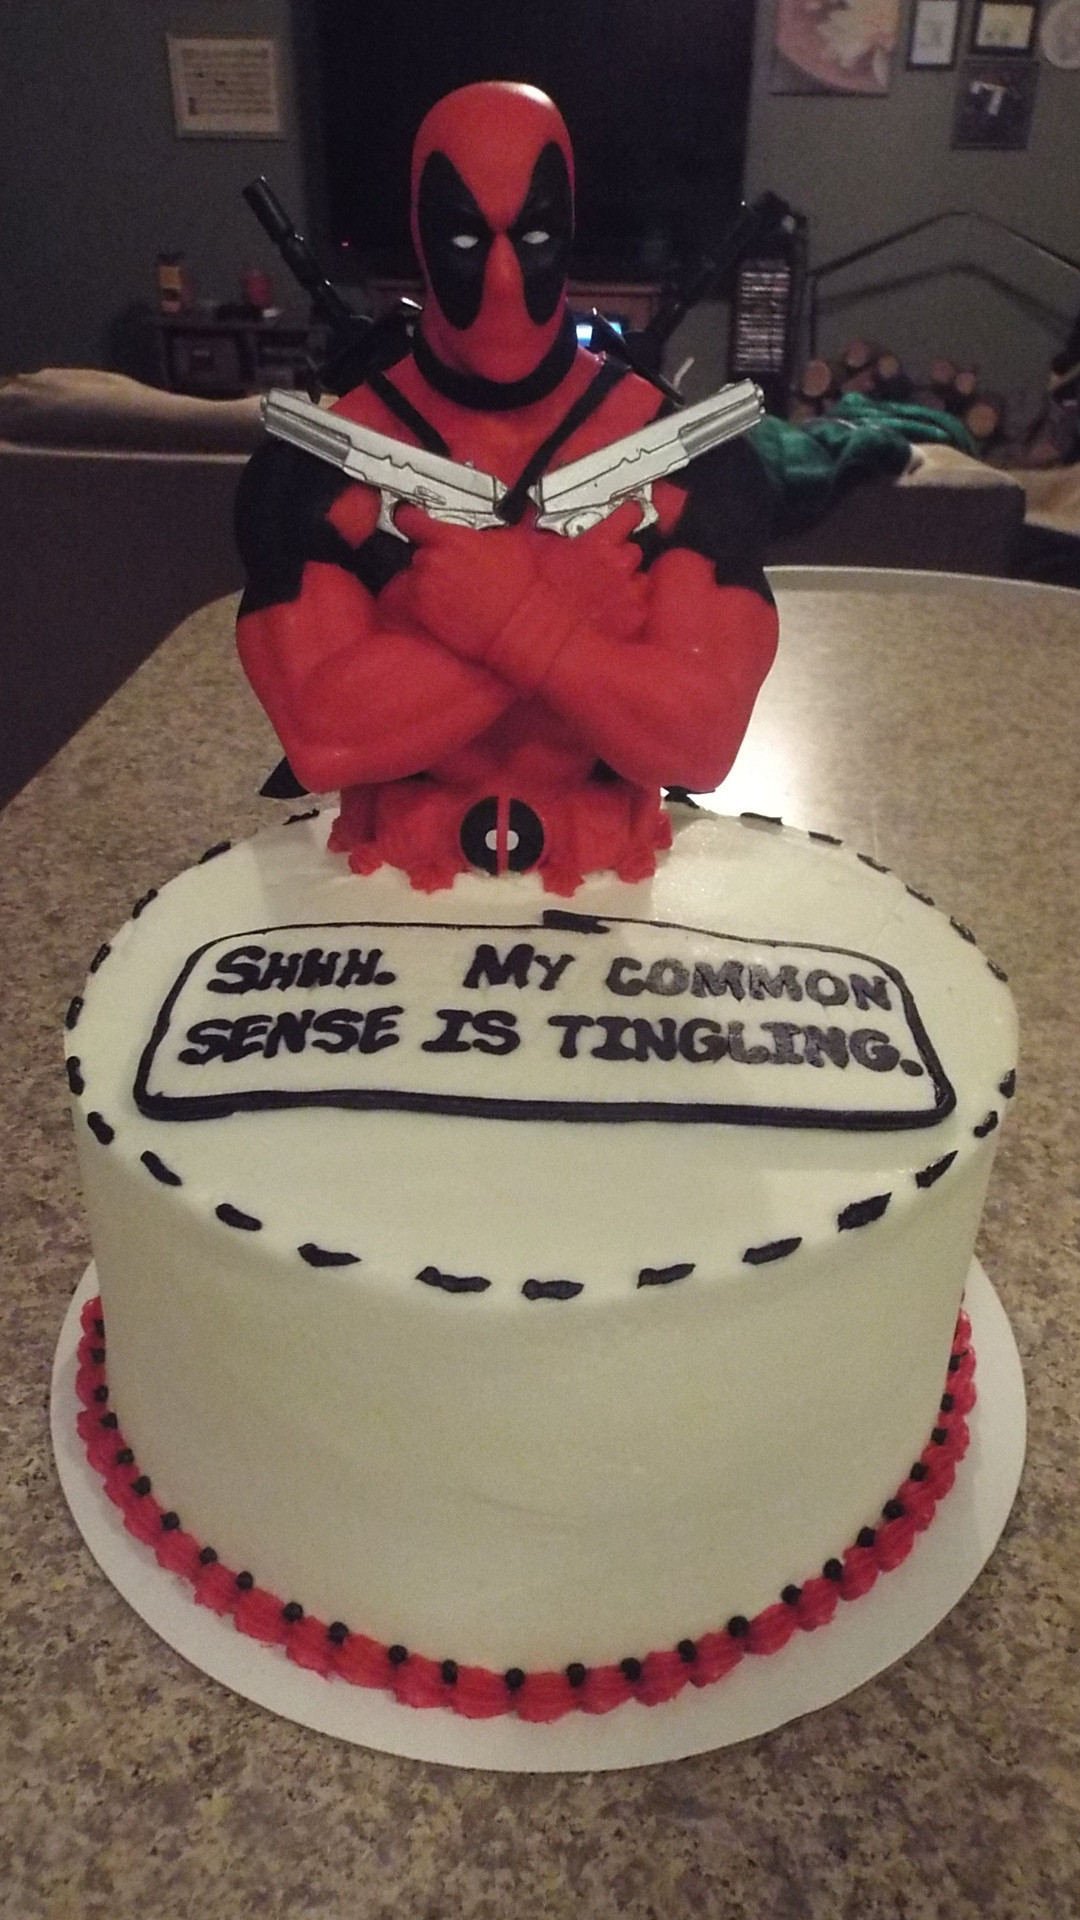 Best ideas about Deadpool Birthday Cake
. Save or Pin Deadpool Birthday Cake deadpool Now.